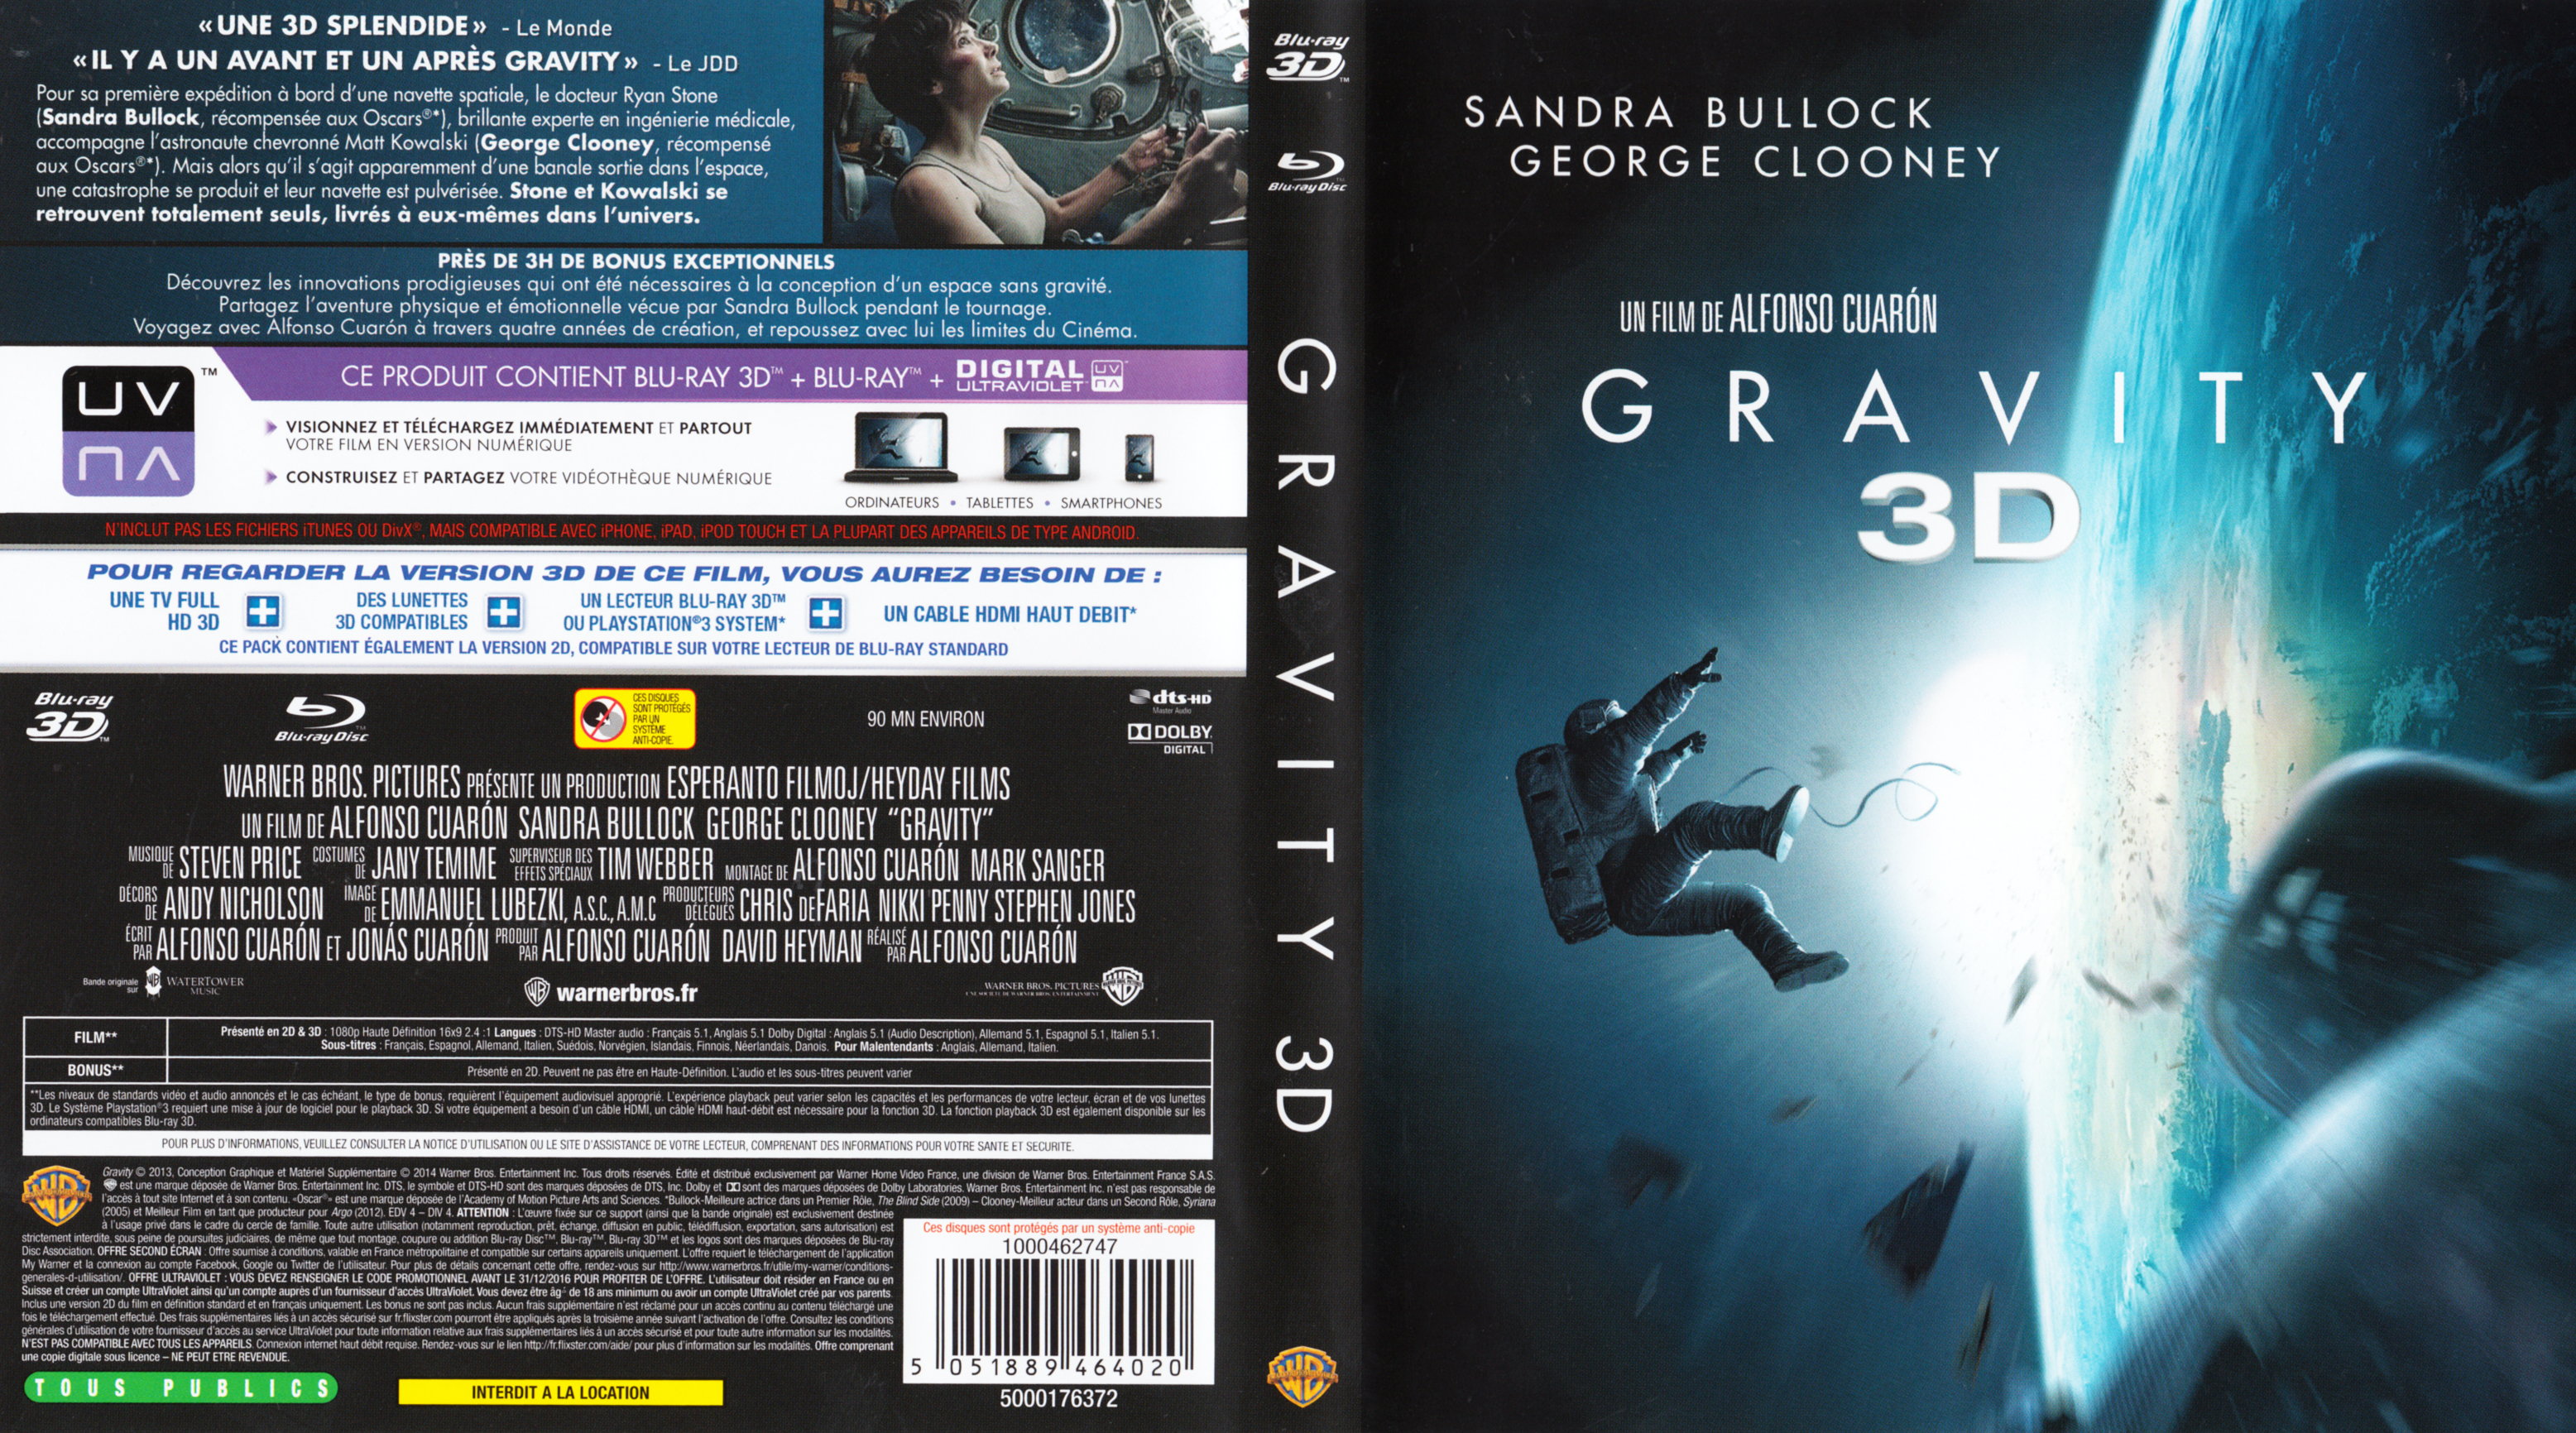 Jaquette DVD Gravity 3D (BLU-RAY) v2